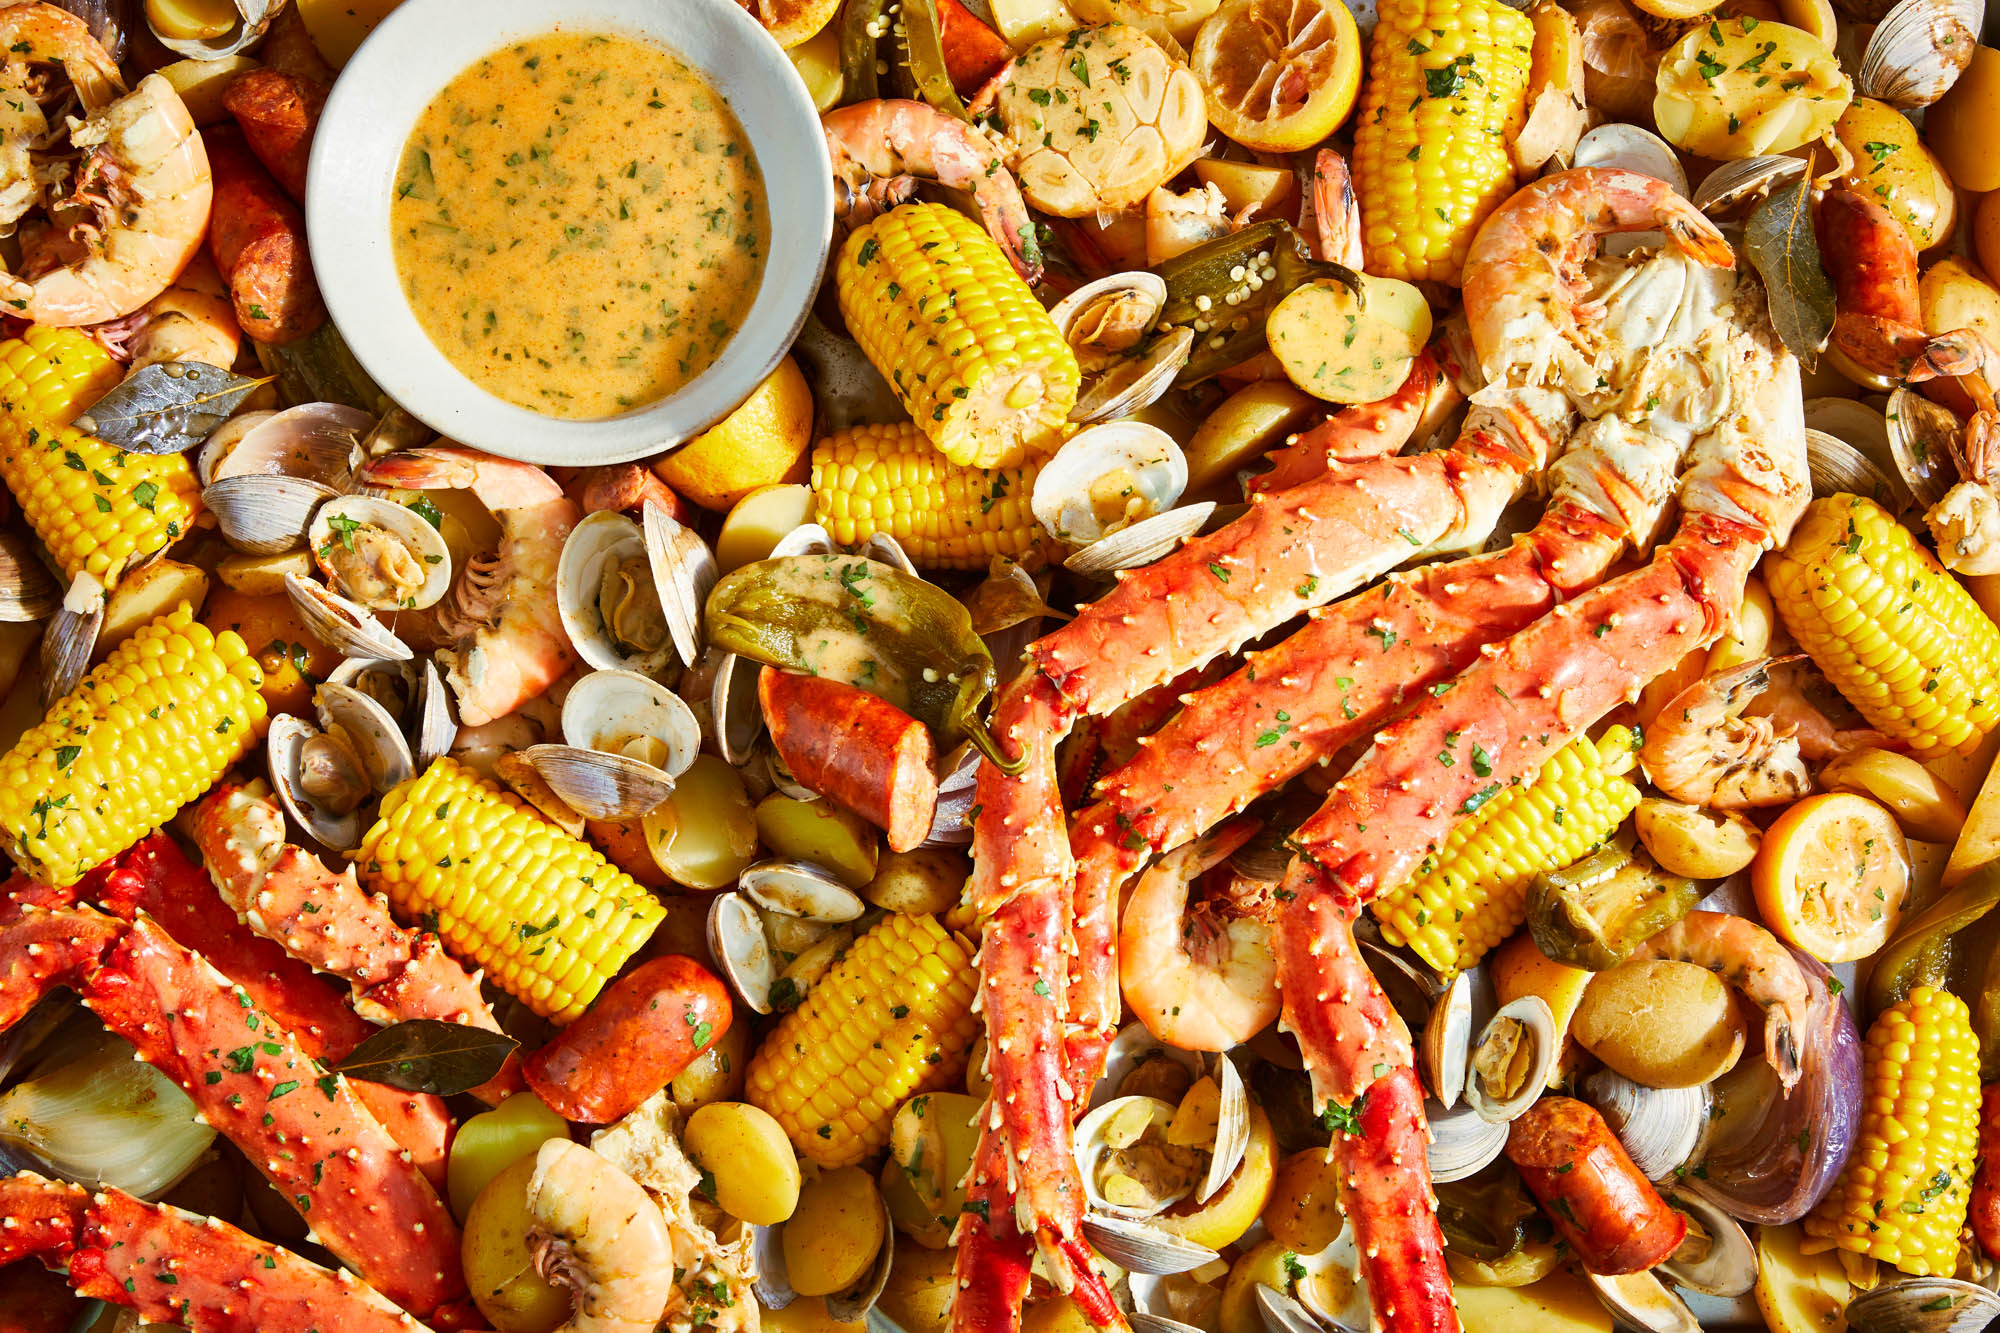 A Reliable Recipe to Follow for a Delicious Shrimp Boil